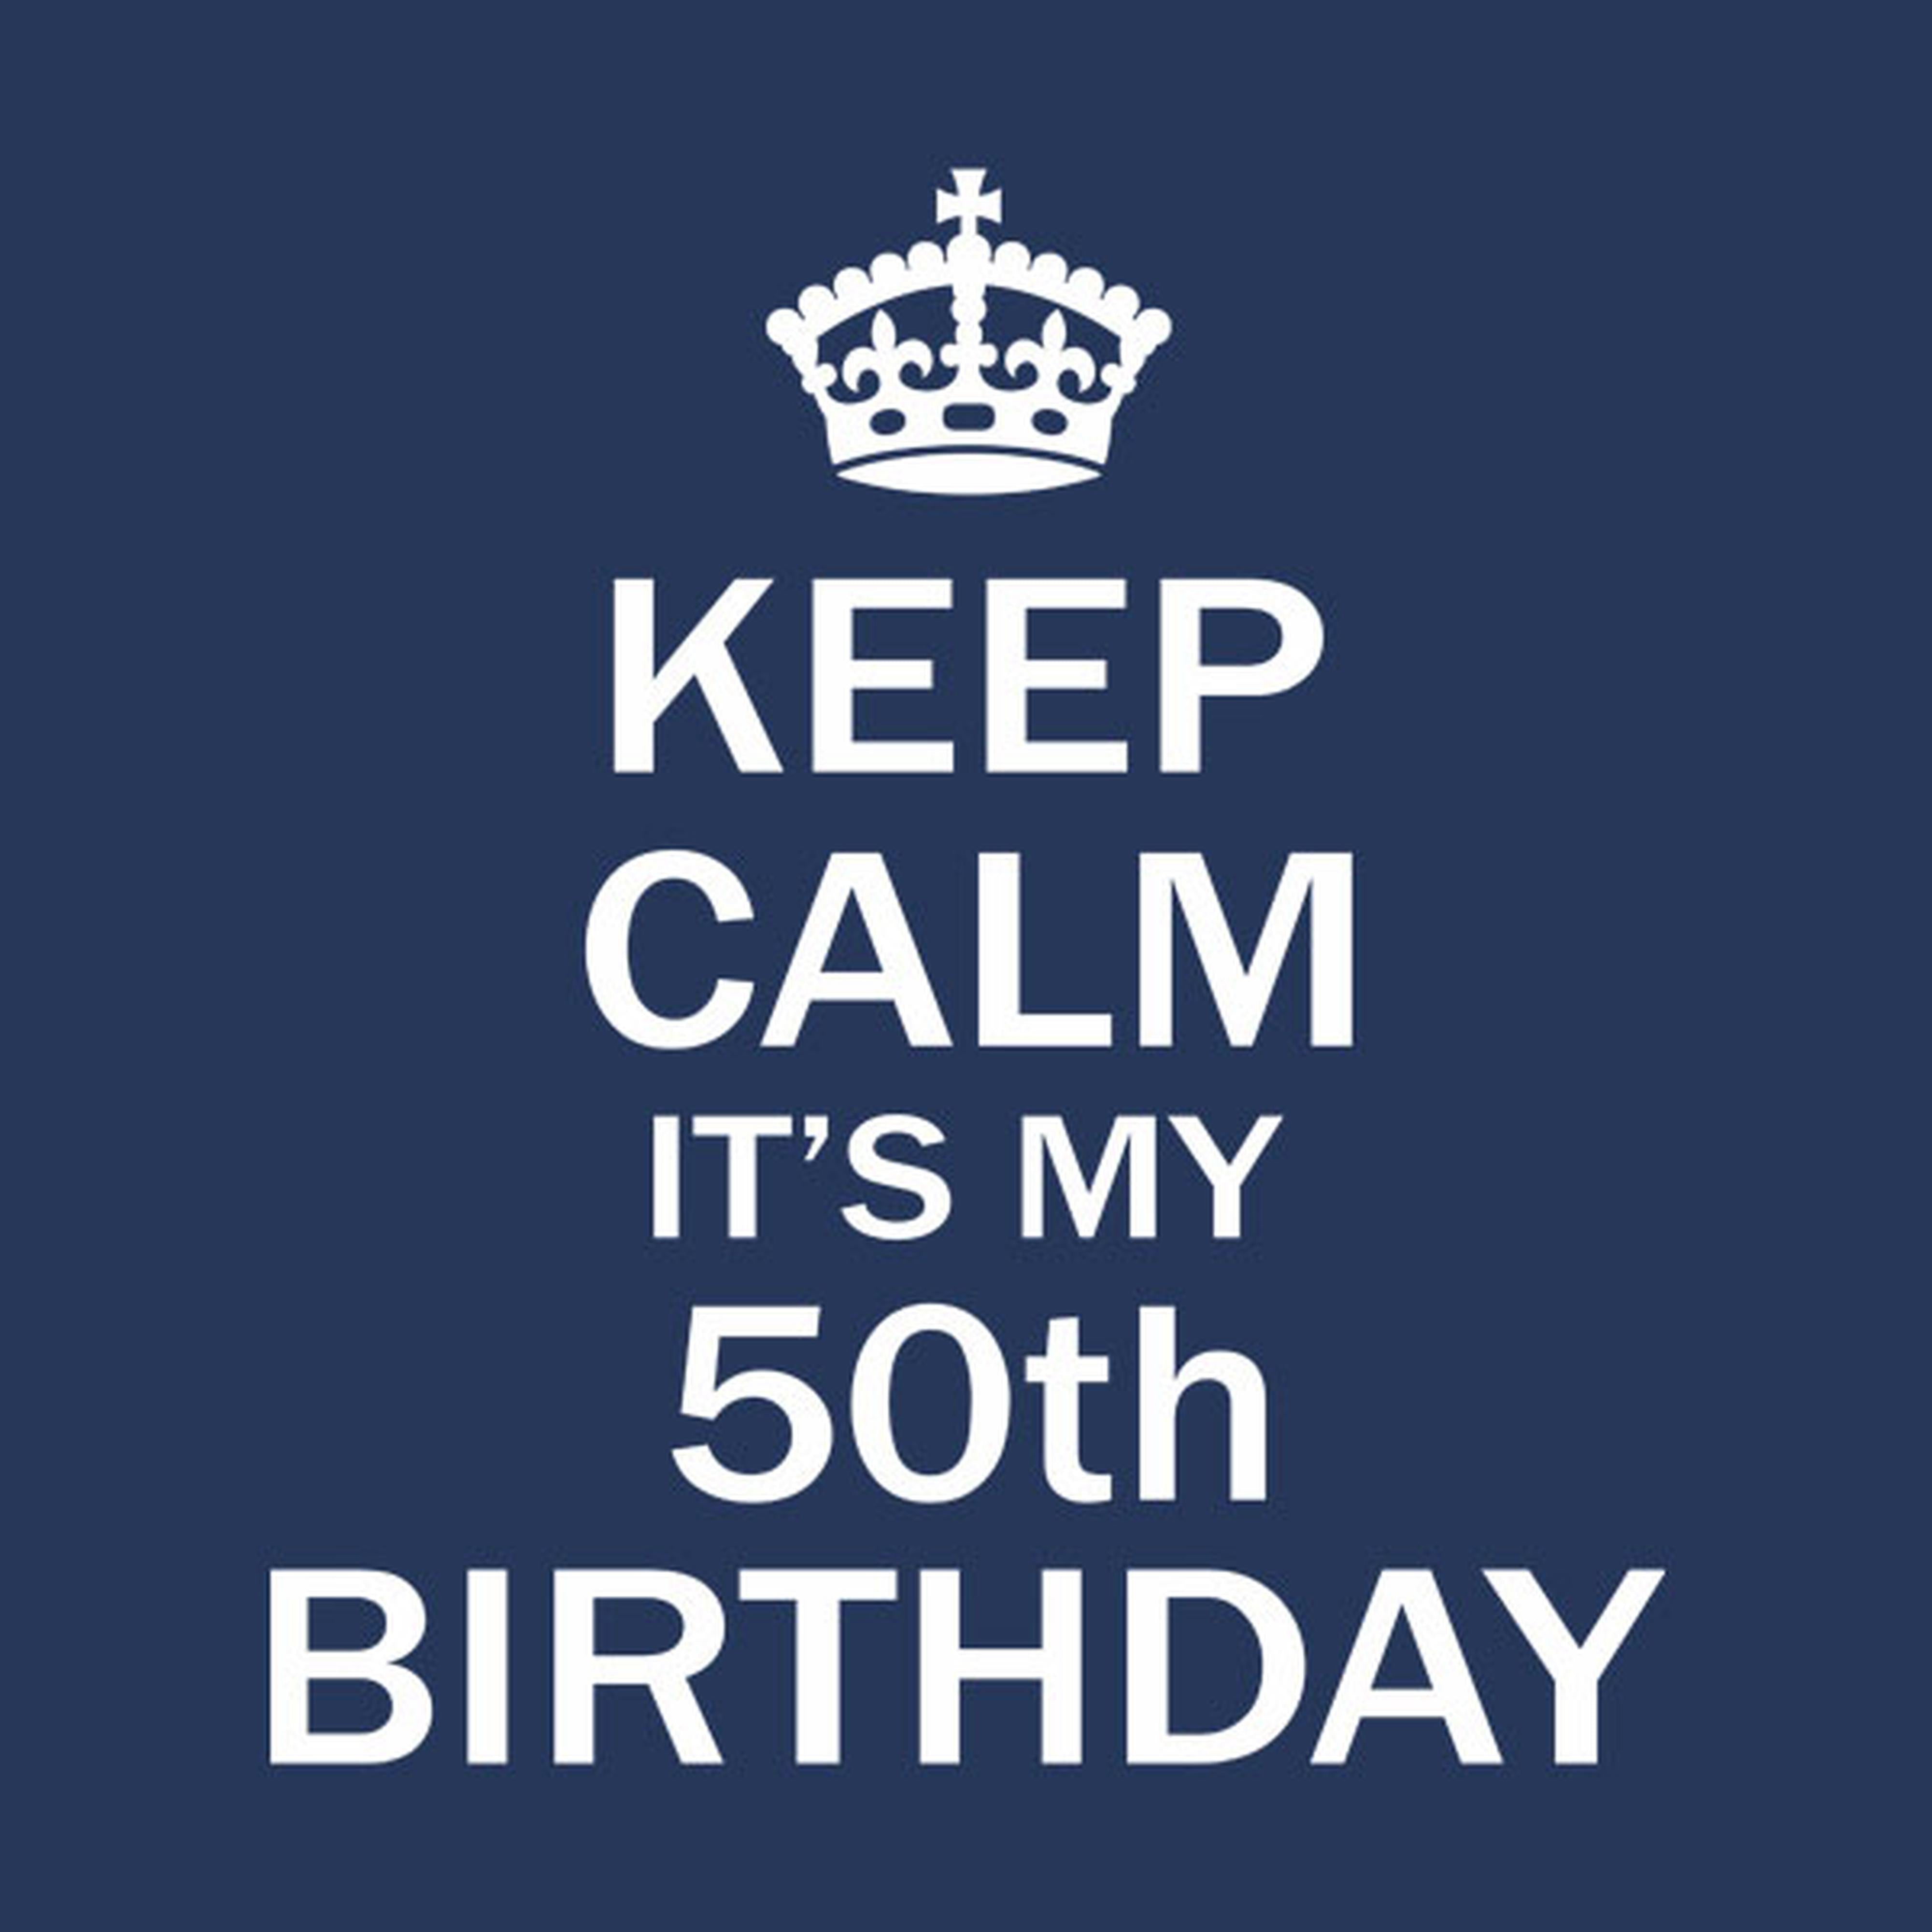 Keep calm it's my 50th birthday